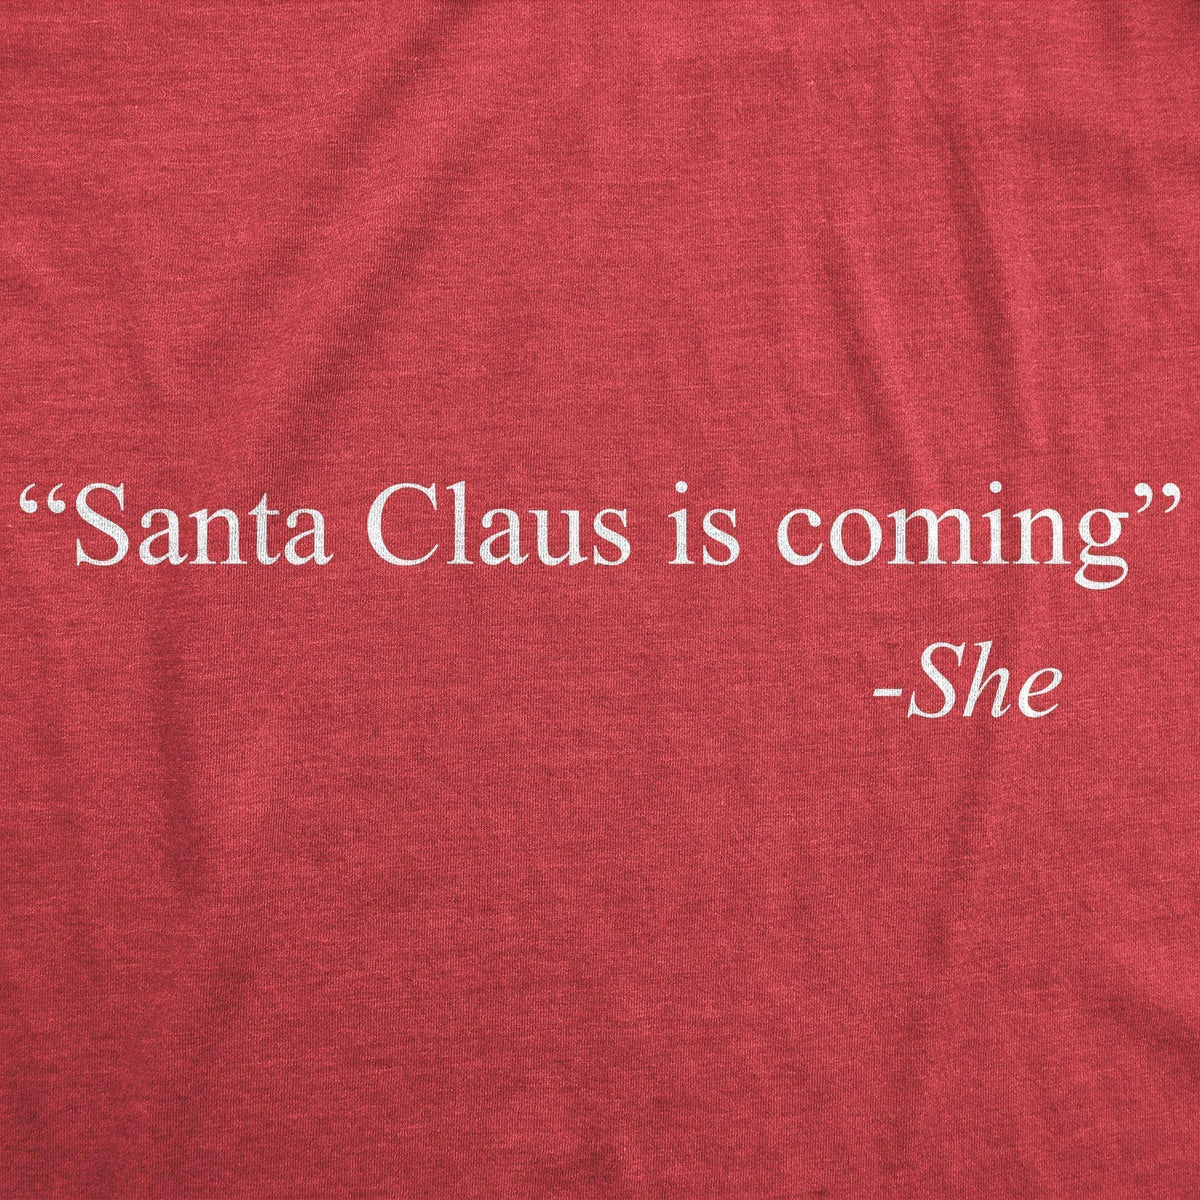 Santa Claus Is Coming -She Women&#39;s Tshirt - Crazy Dog T-Shirts